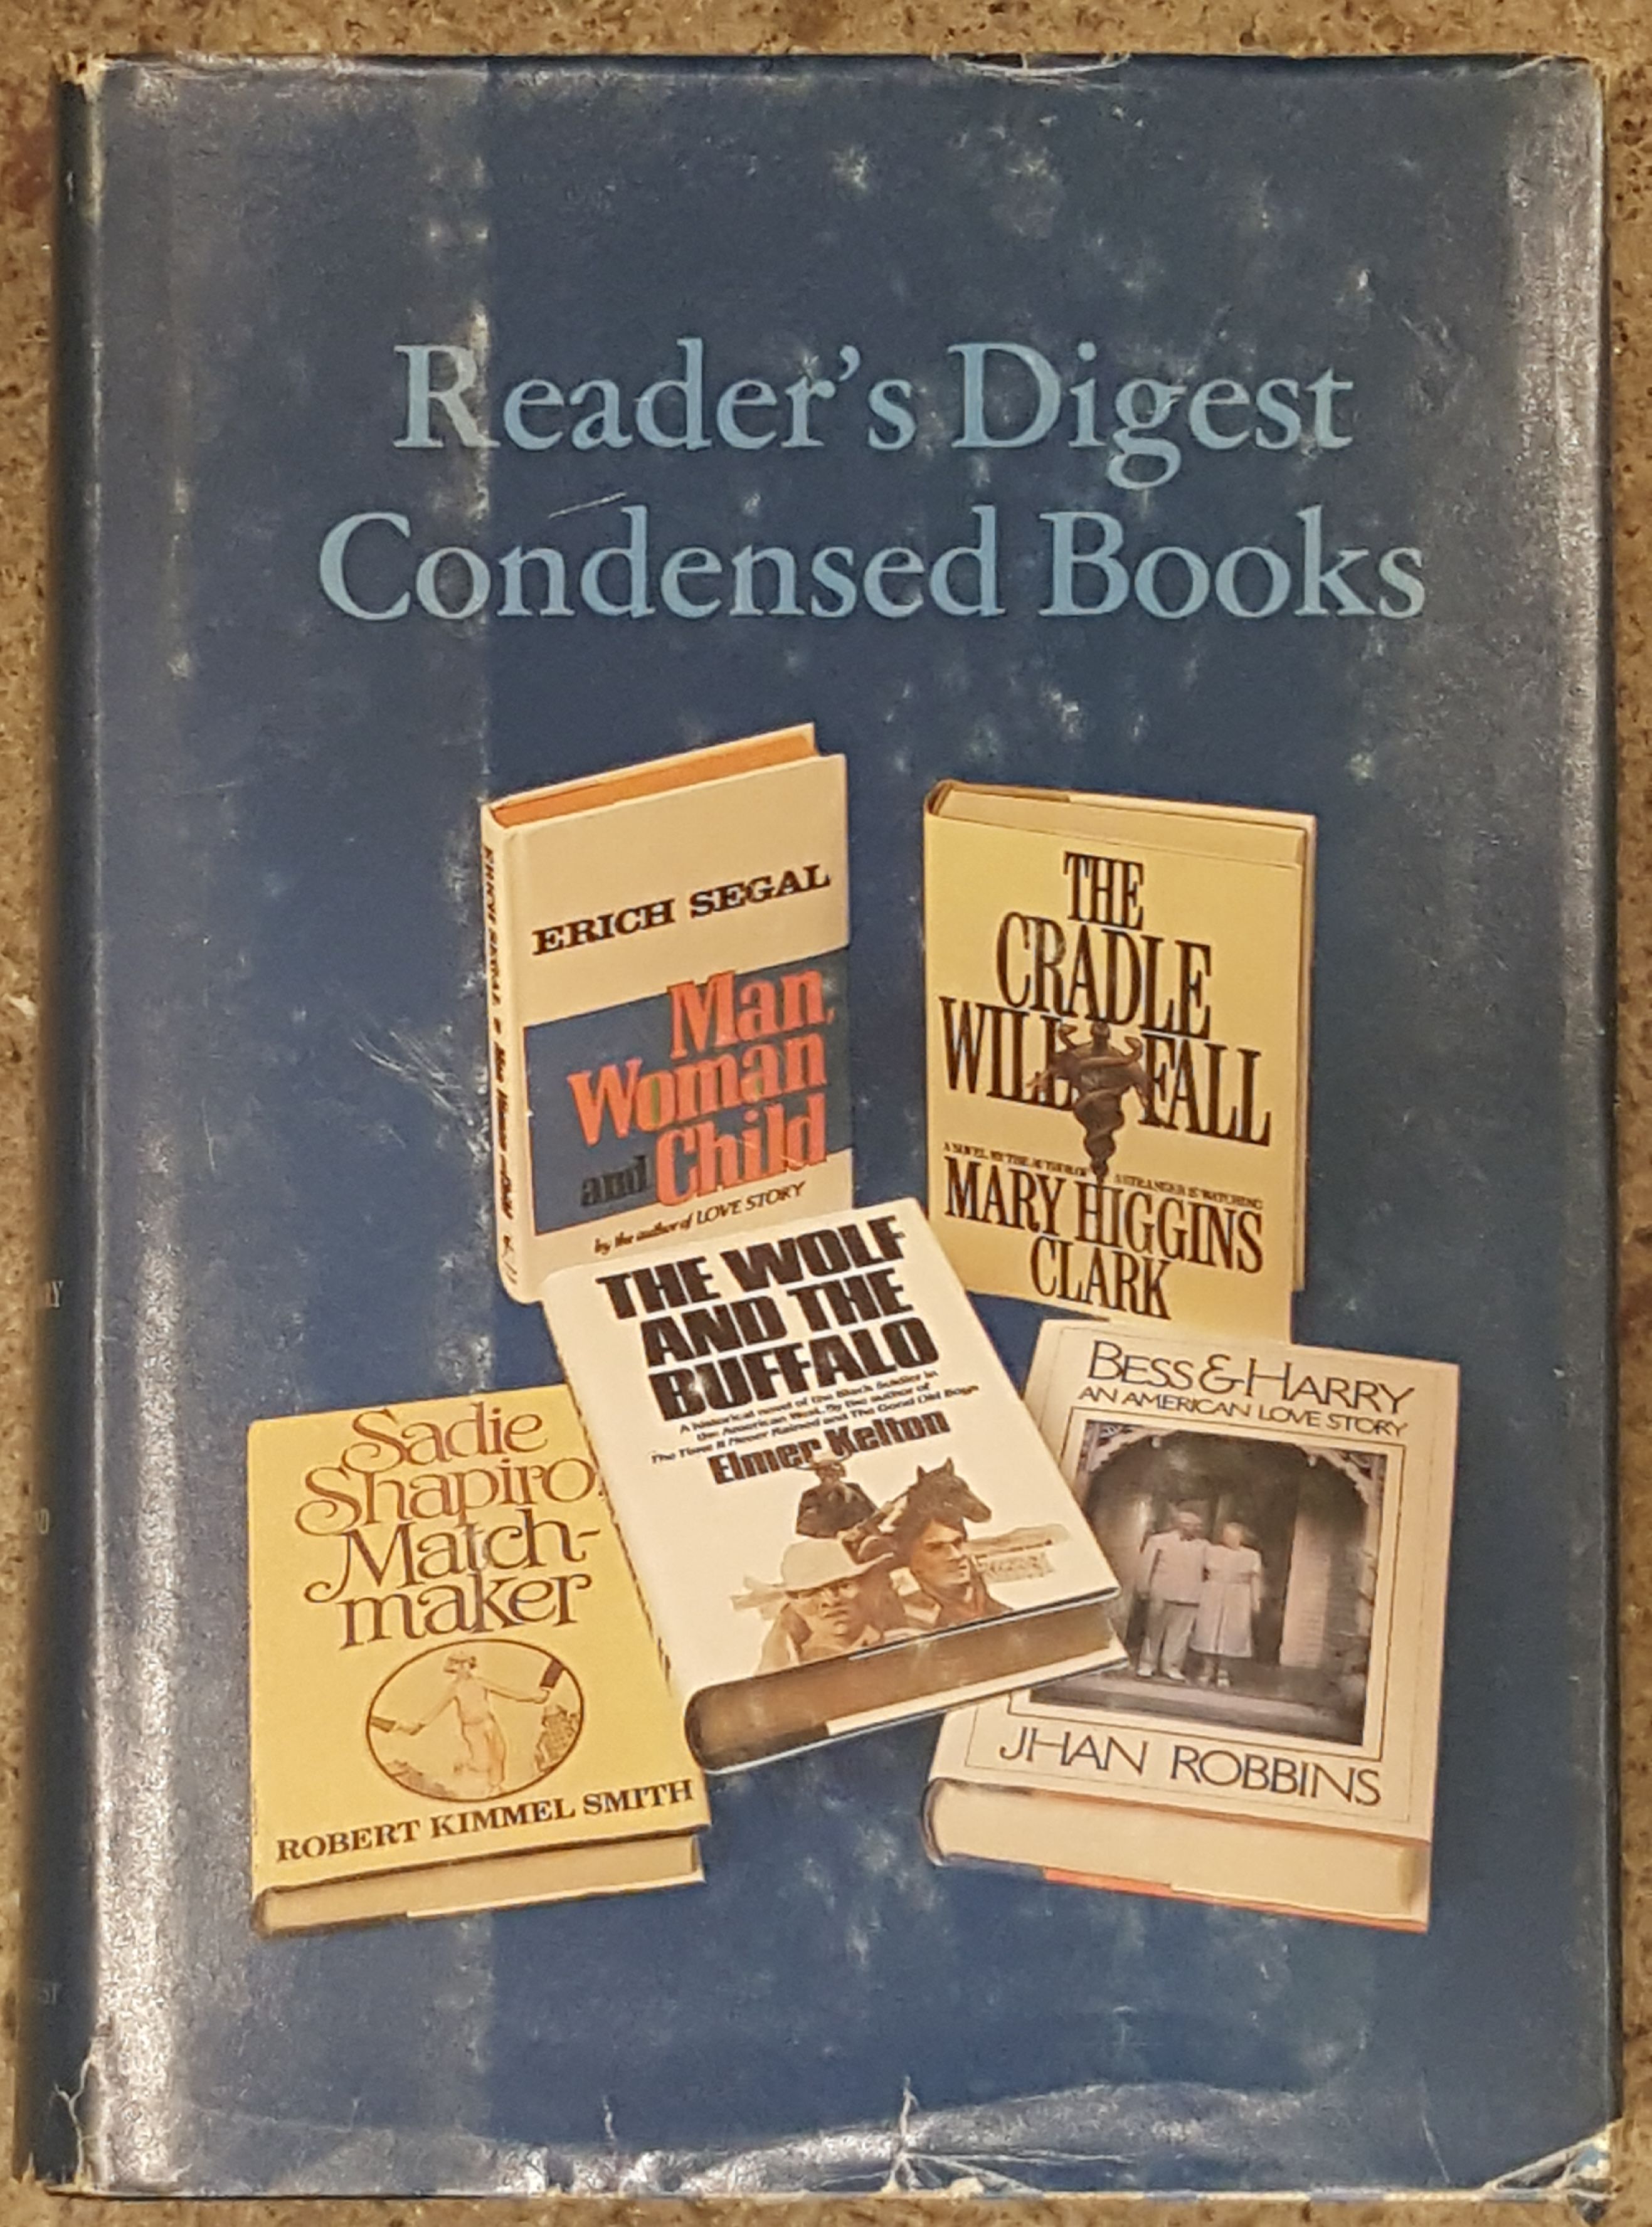 Readers Digest Condensed Books Volume 4 1980 by Erich Segal, Mary Higgins  Clark, Elmer Kelton, Robert Kimmel Smith, Jhan Robbins: Very Good+  Hardcover (1980) First Edition.